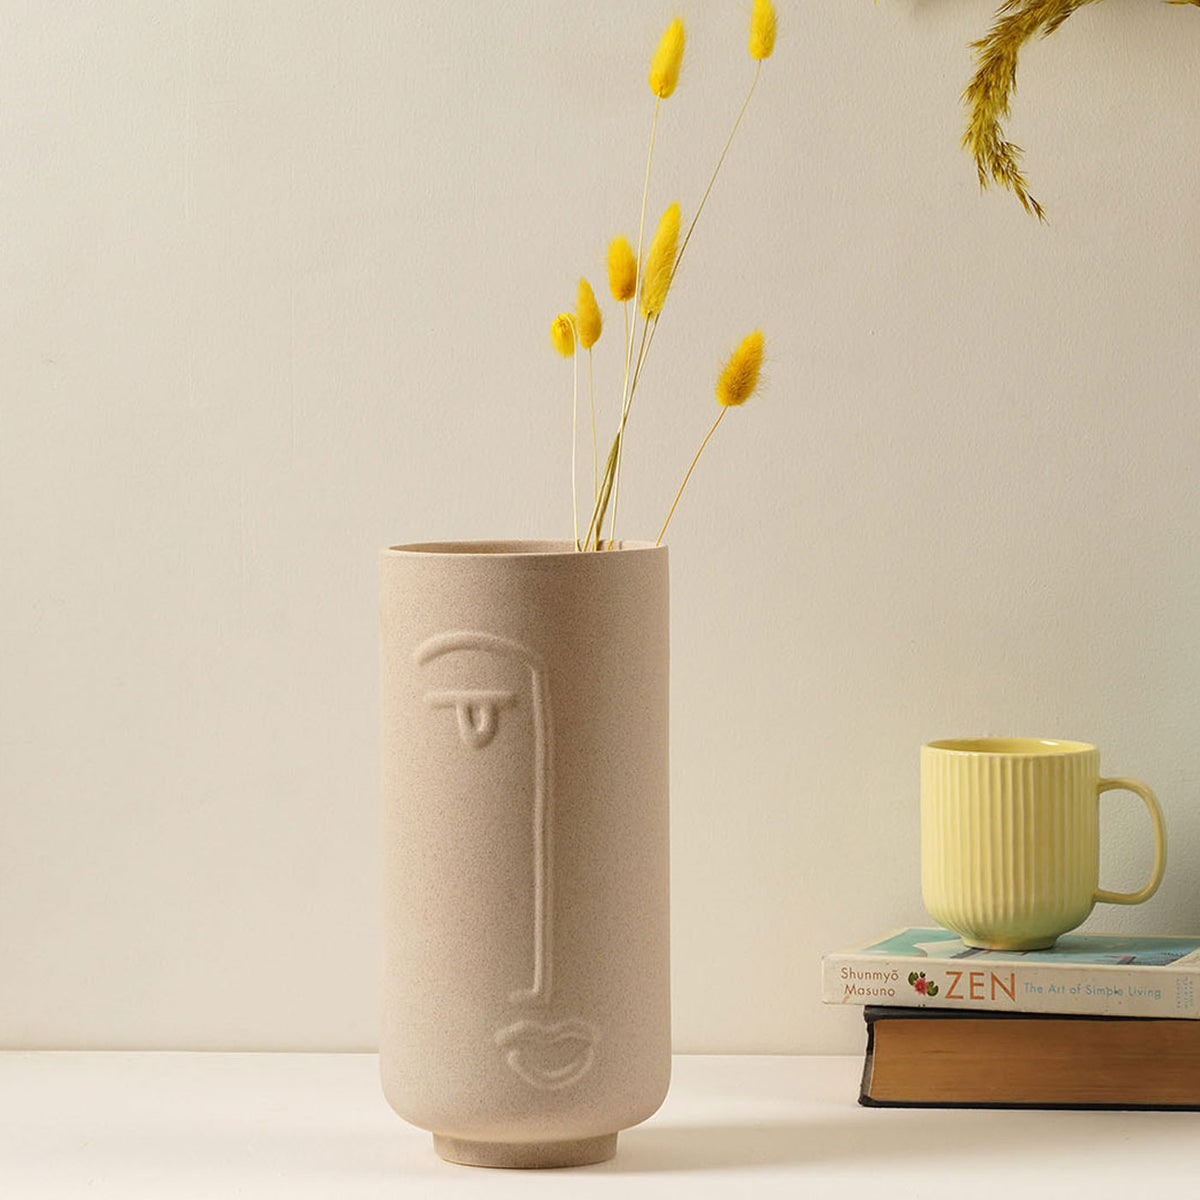 Jizo Japanese Face Vase